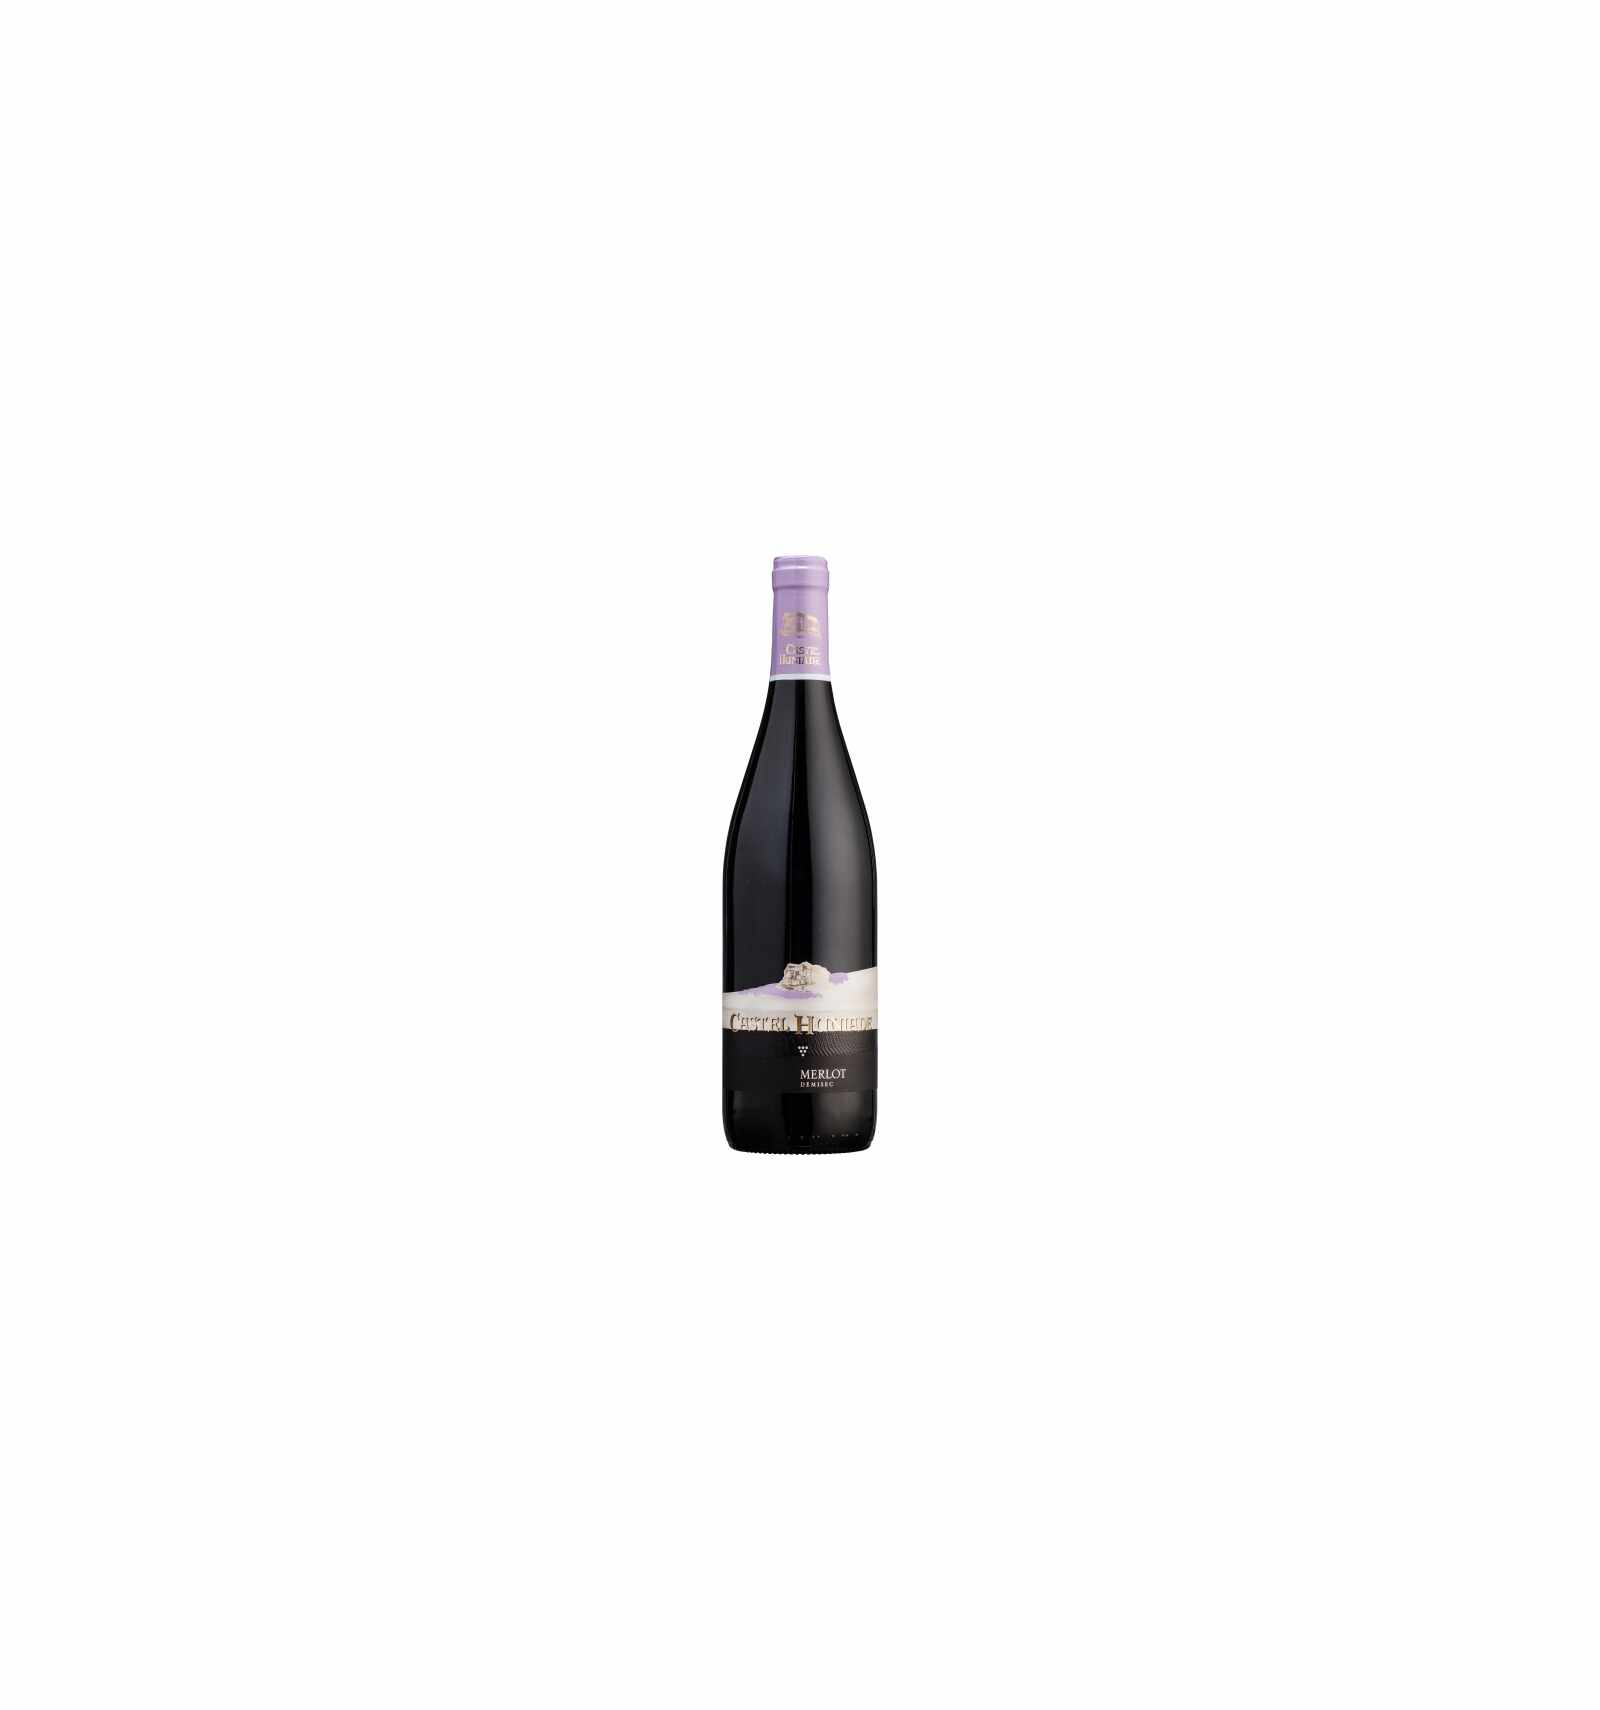 Vin rosu demidulce, Merlot, Castel Huniade Recas, 0.75L, 12.5% alc., Romania